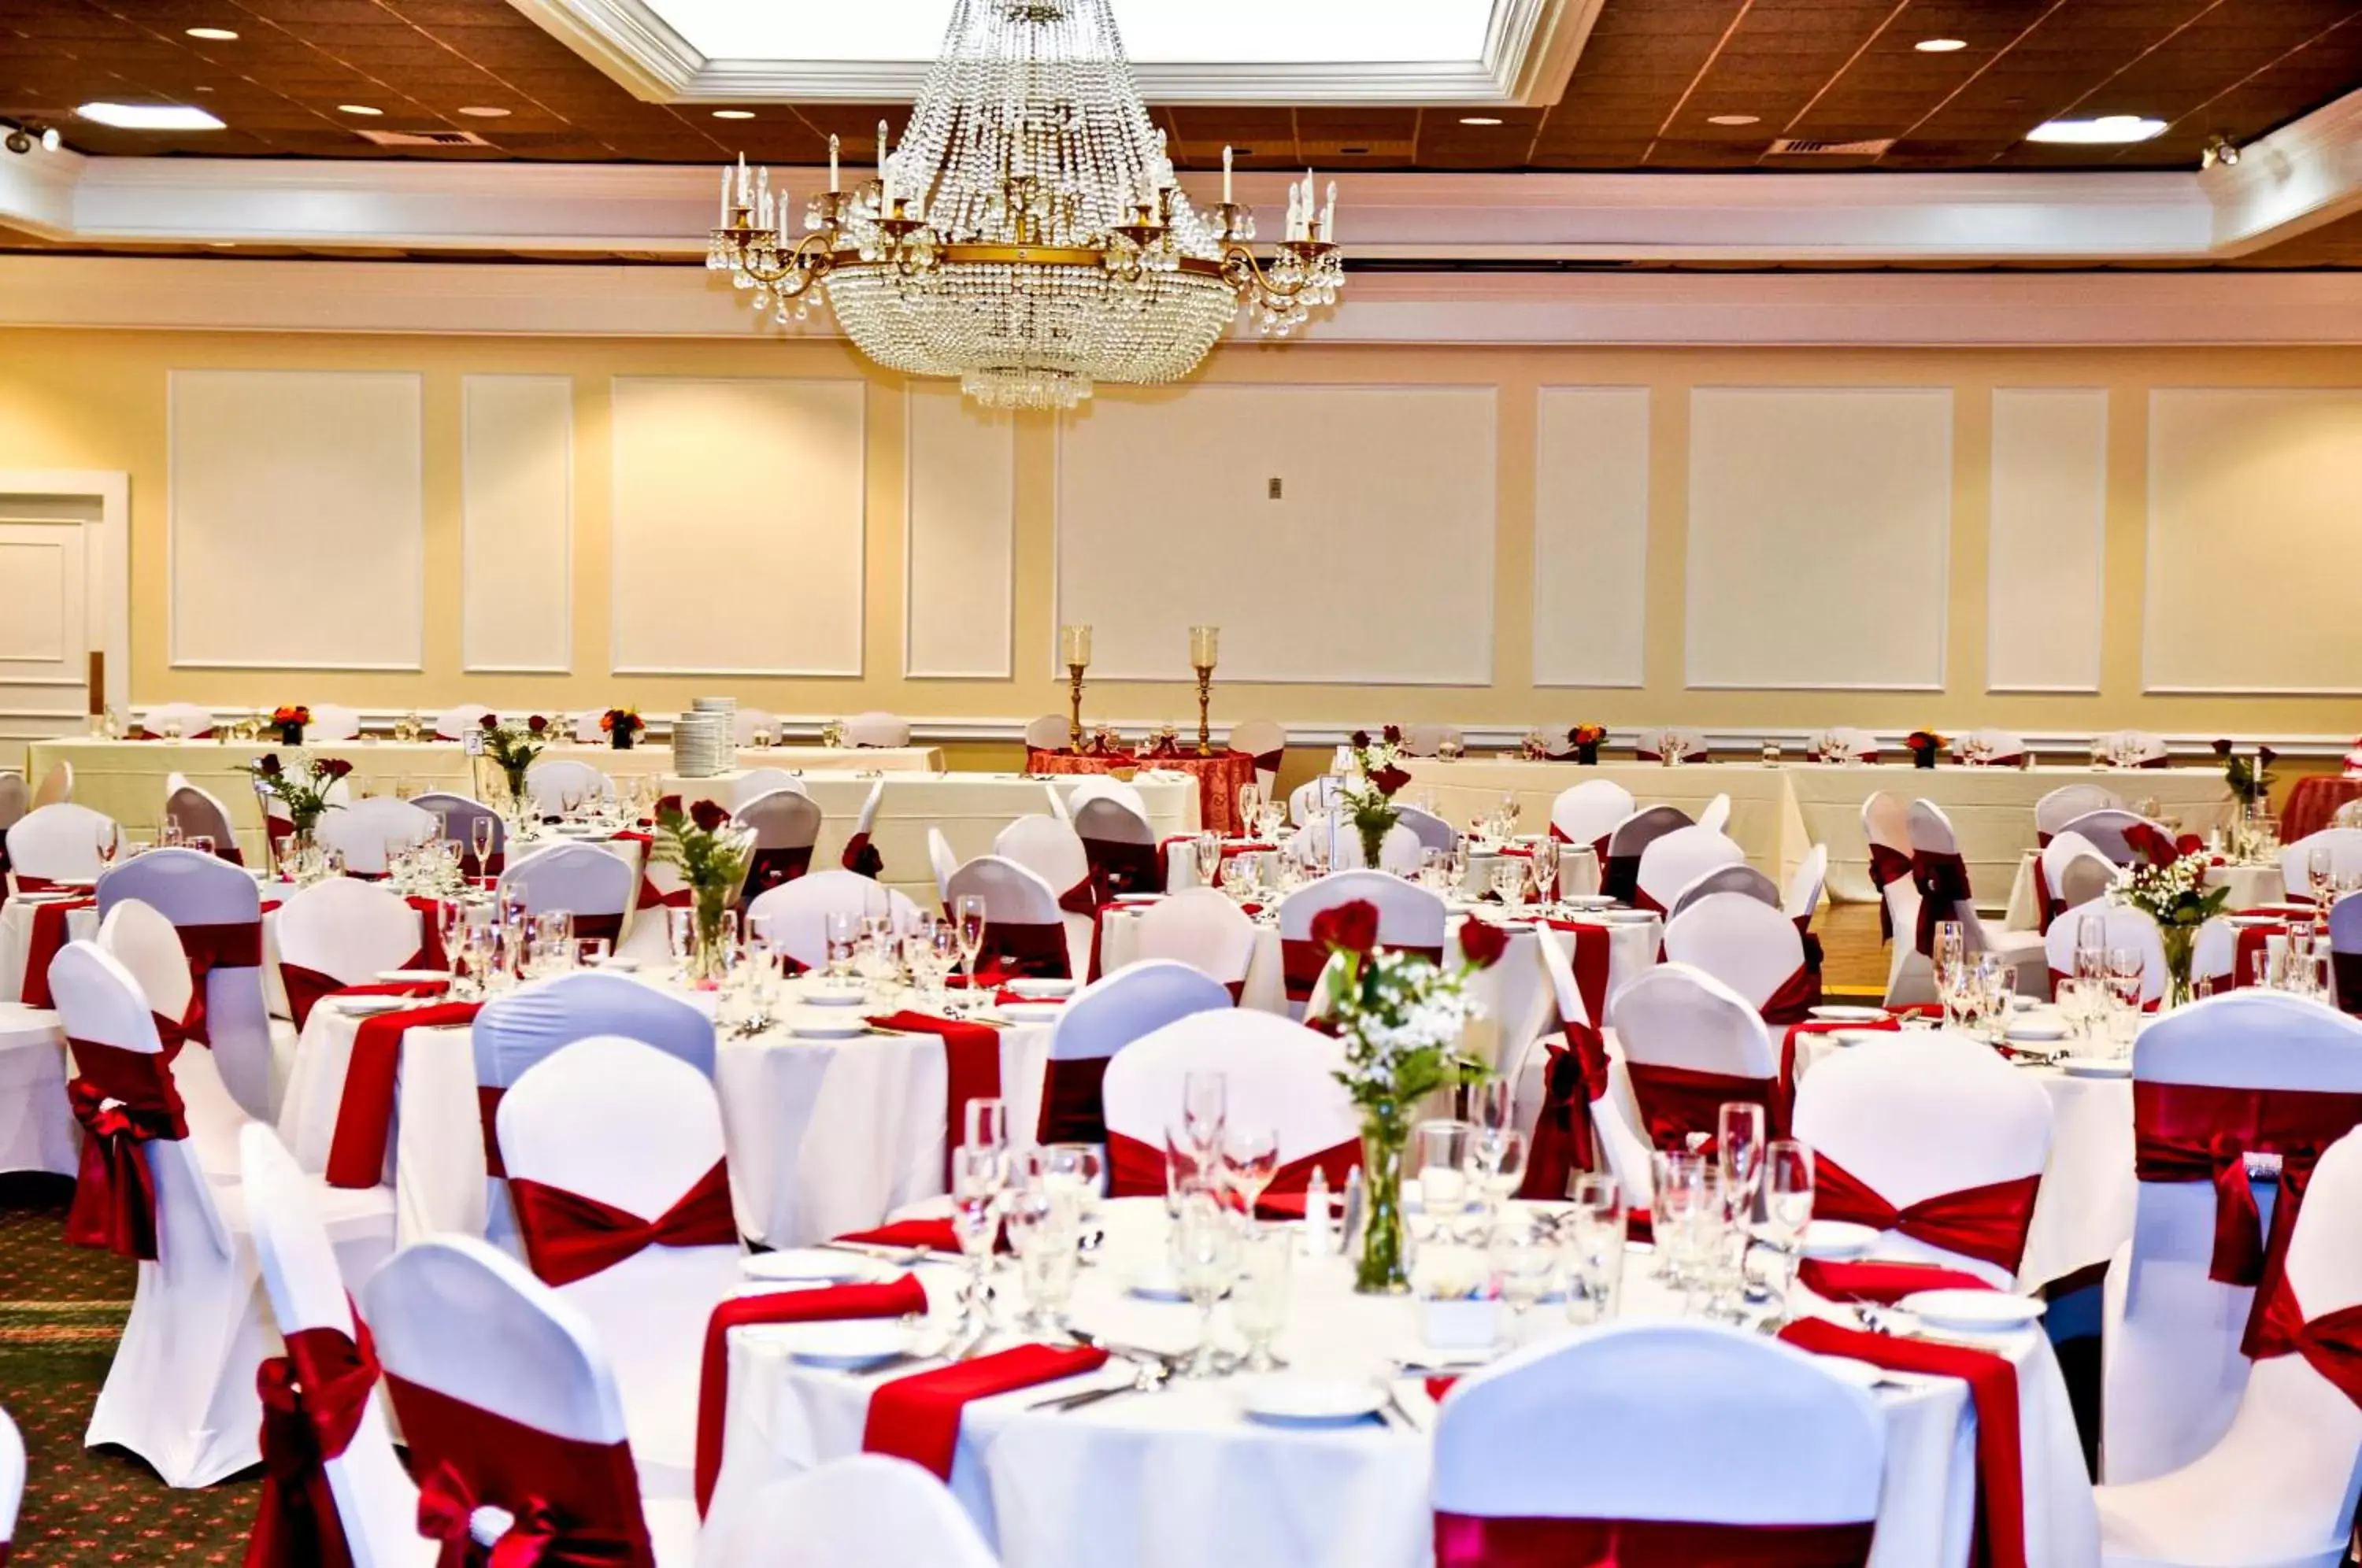 Banquet/Function facilities, Banquet Facilities in Ramada by Wyndham Seekonk Providence Area